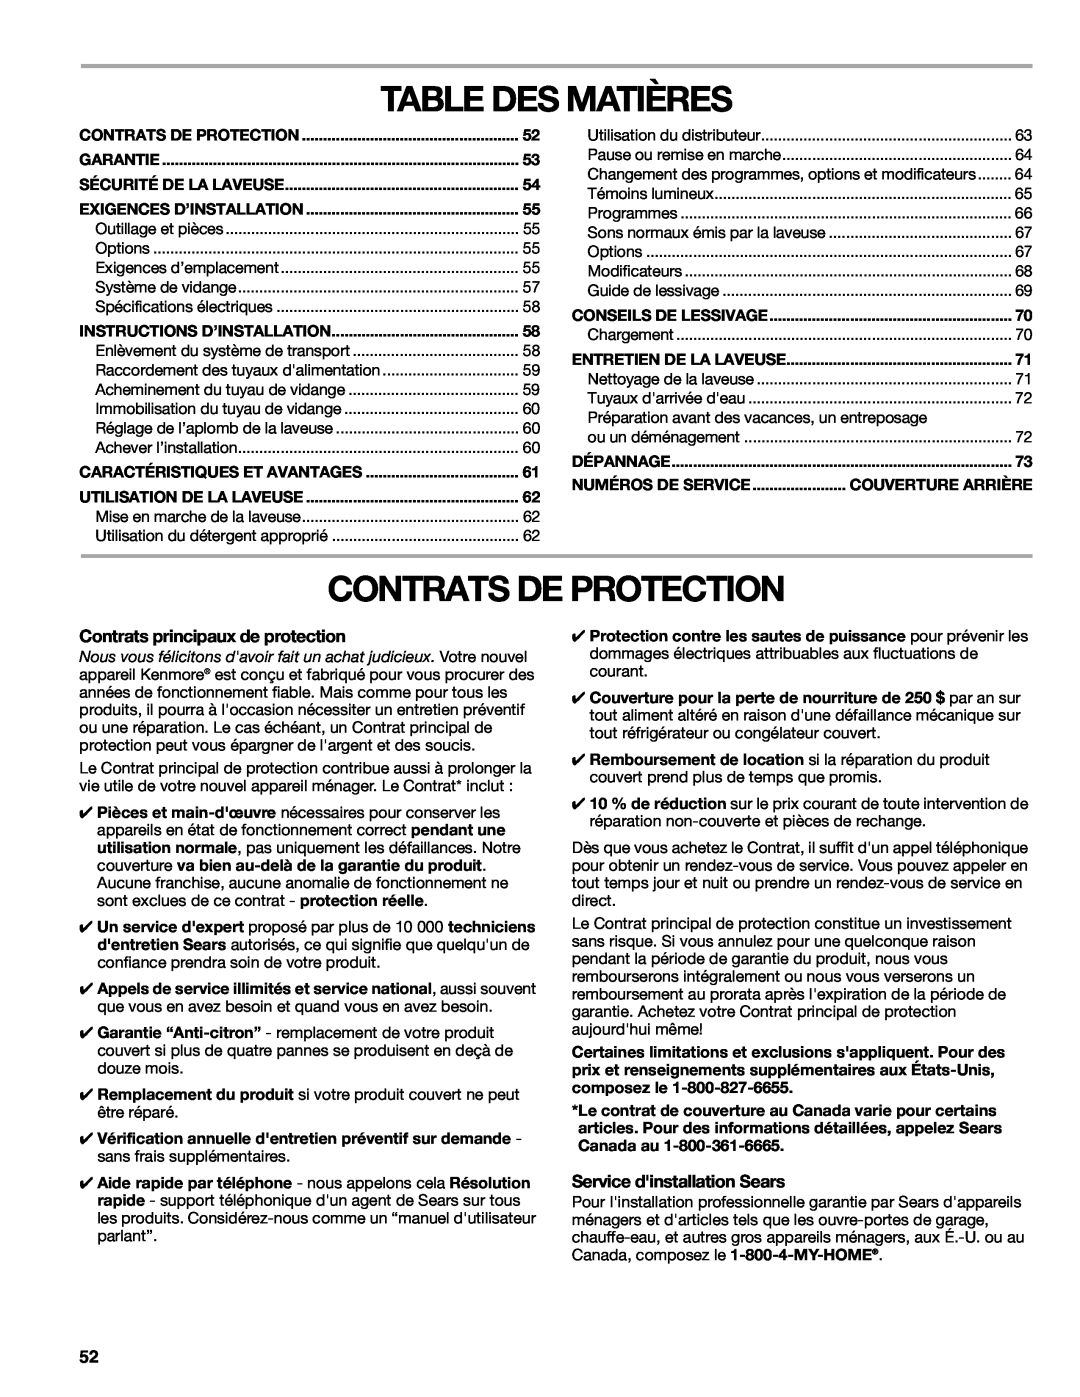 Kenmore W10133487A manual Table Des Matières, Contrats De Protection, Contrats principaux de protection 